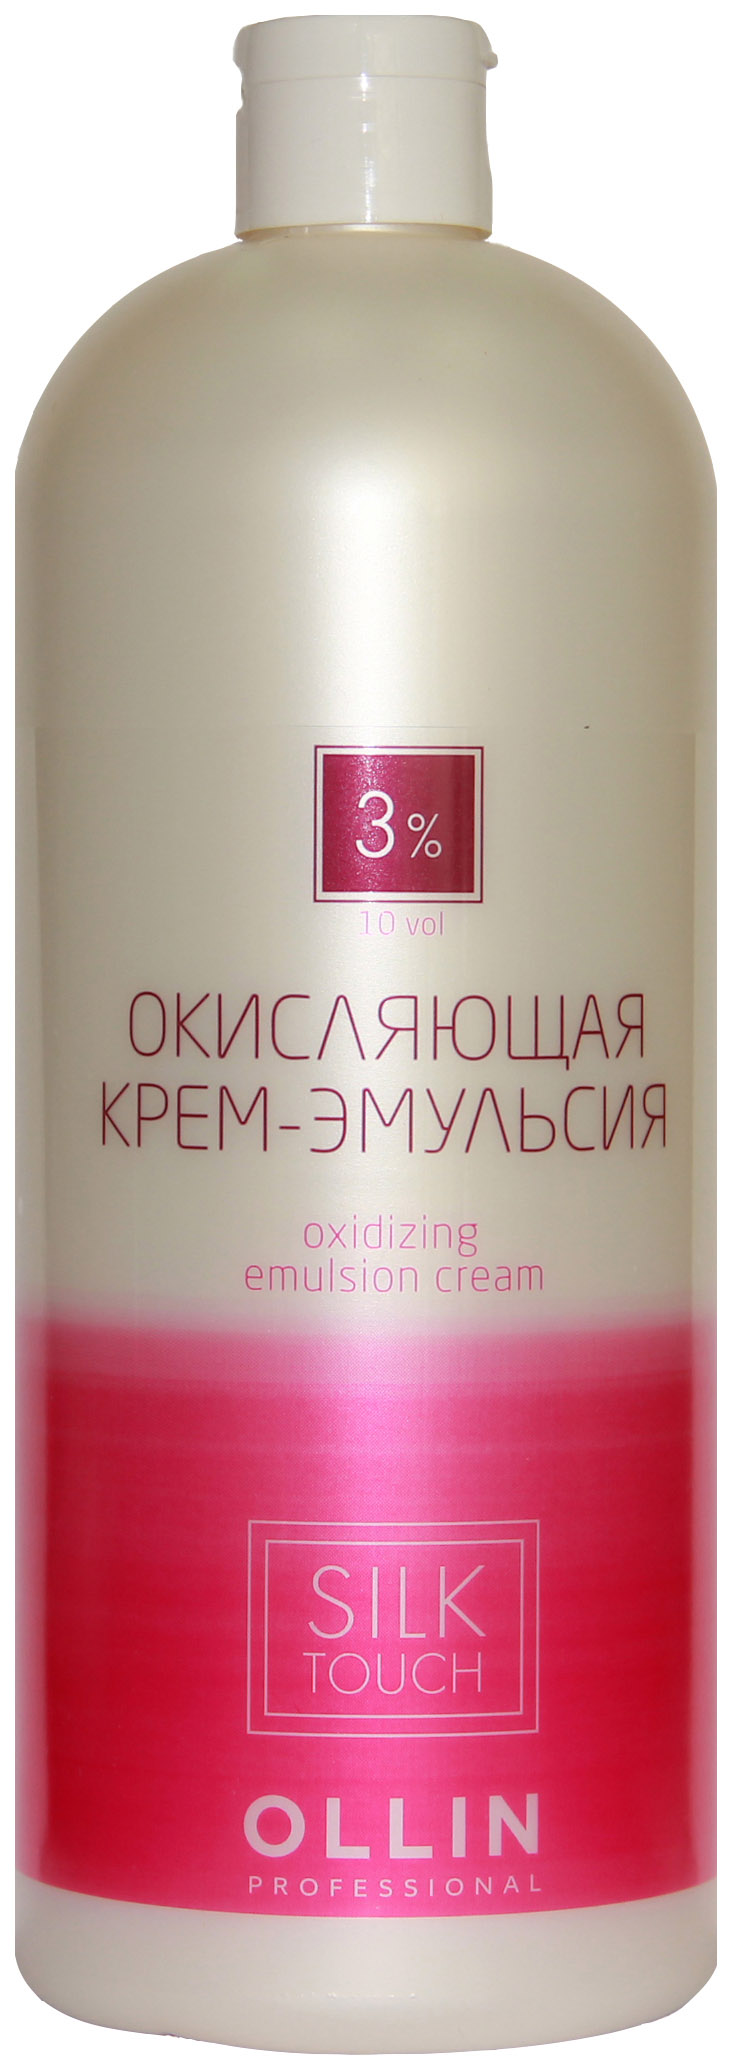 Проявитель Ollin Professional Silk Touch 3% 1000 мл braun эпилятор женский silk epil 9 flex ses 9002 3d